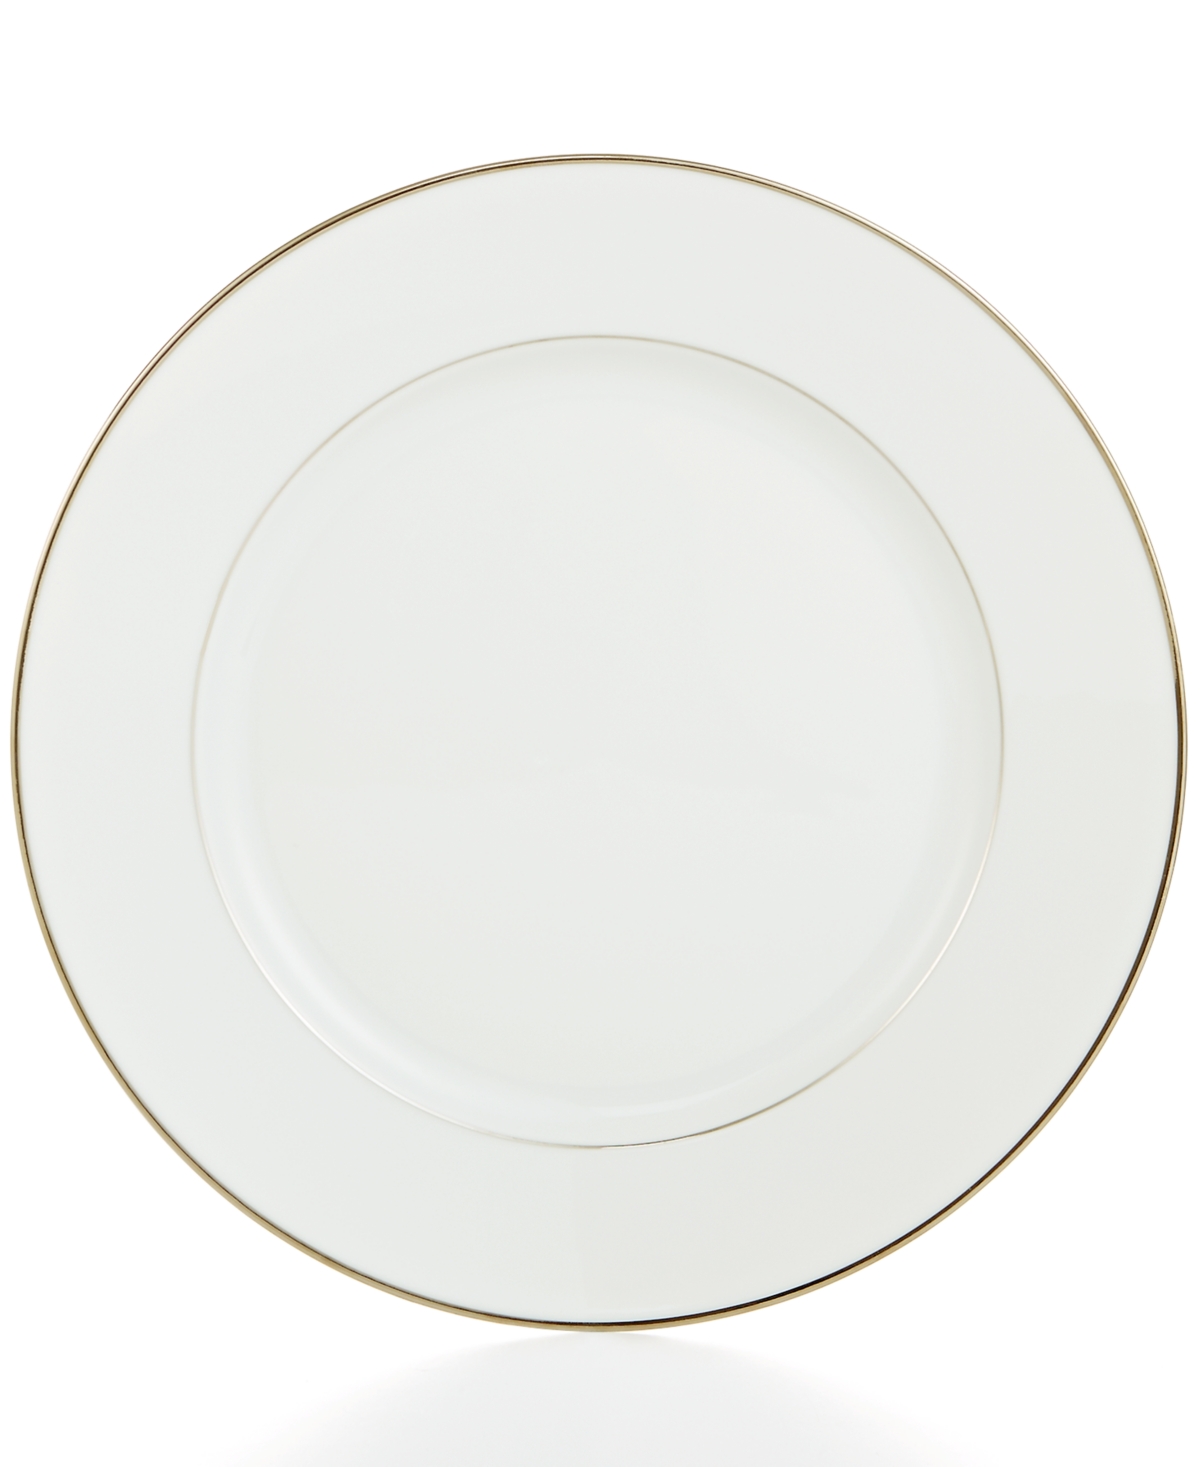 204276 Bernardaud Cristal Dinner Plate sku 204276